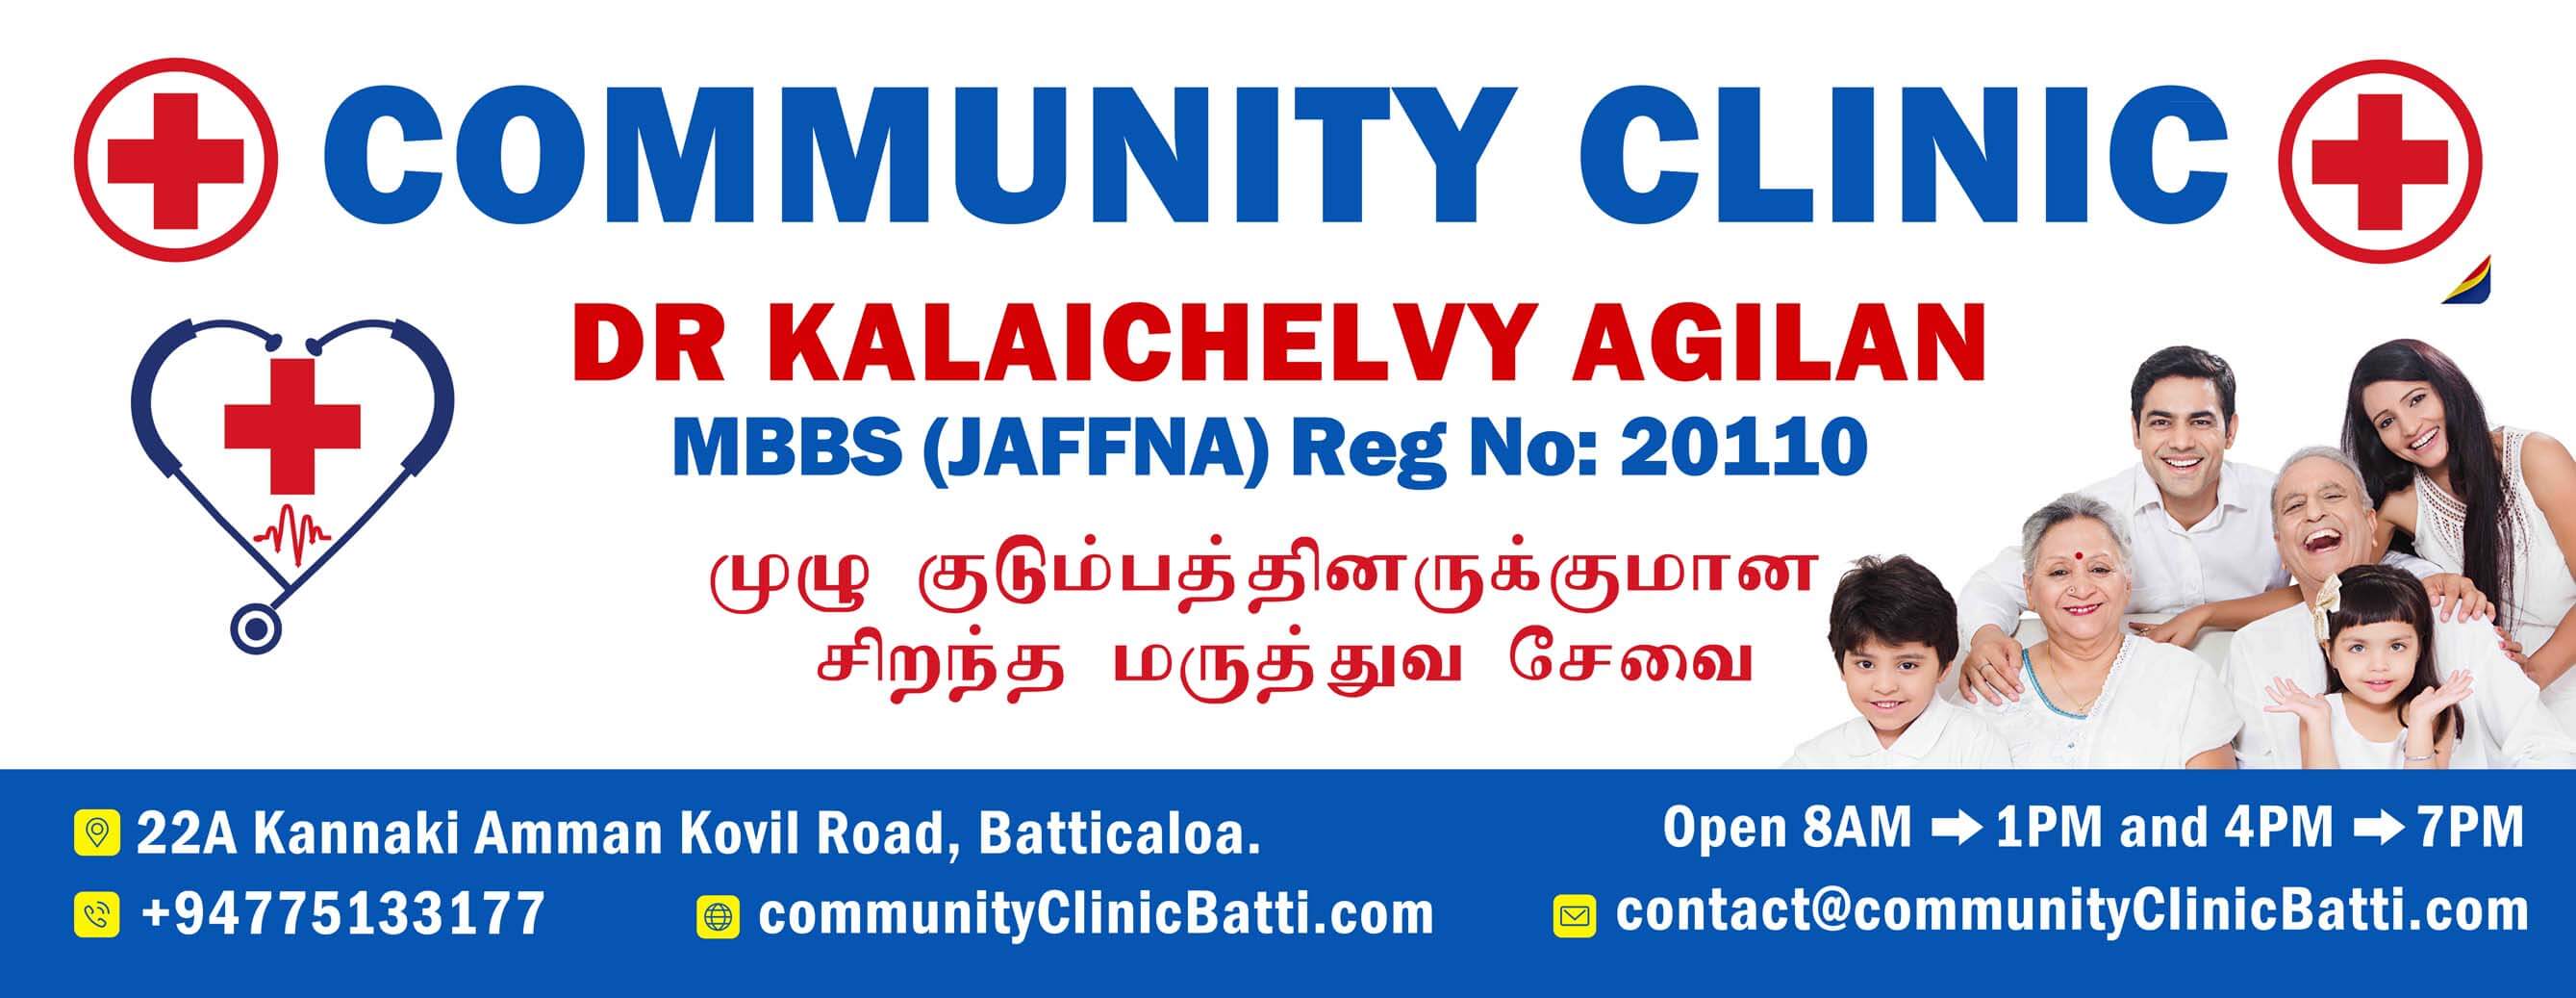 Community_Clinic_Batti.jpg